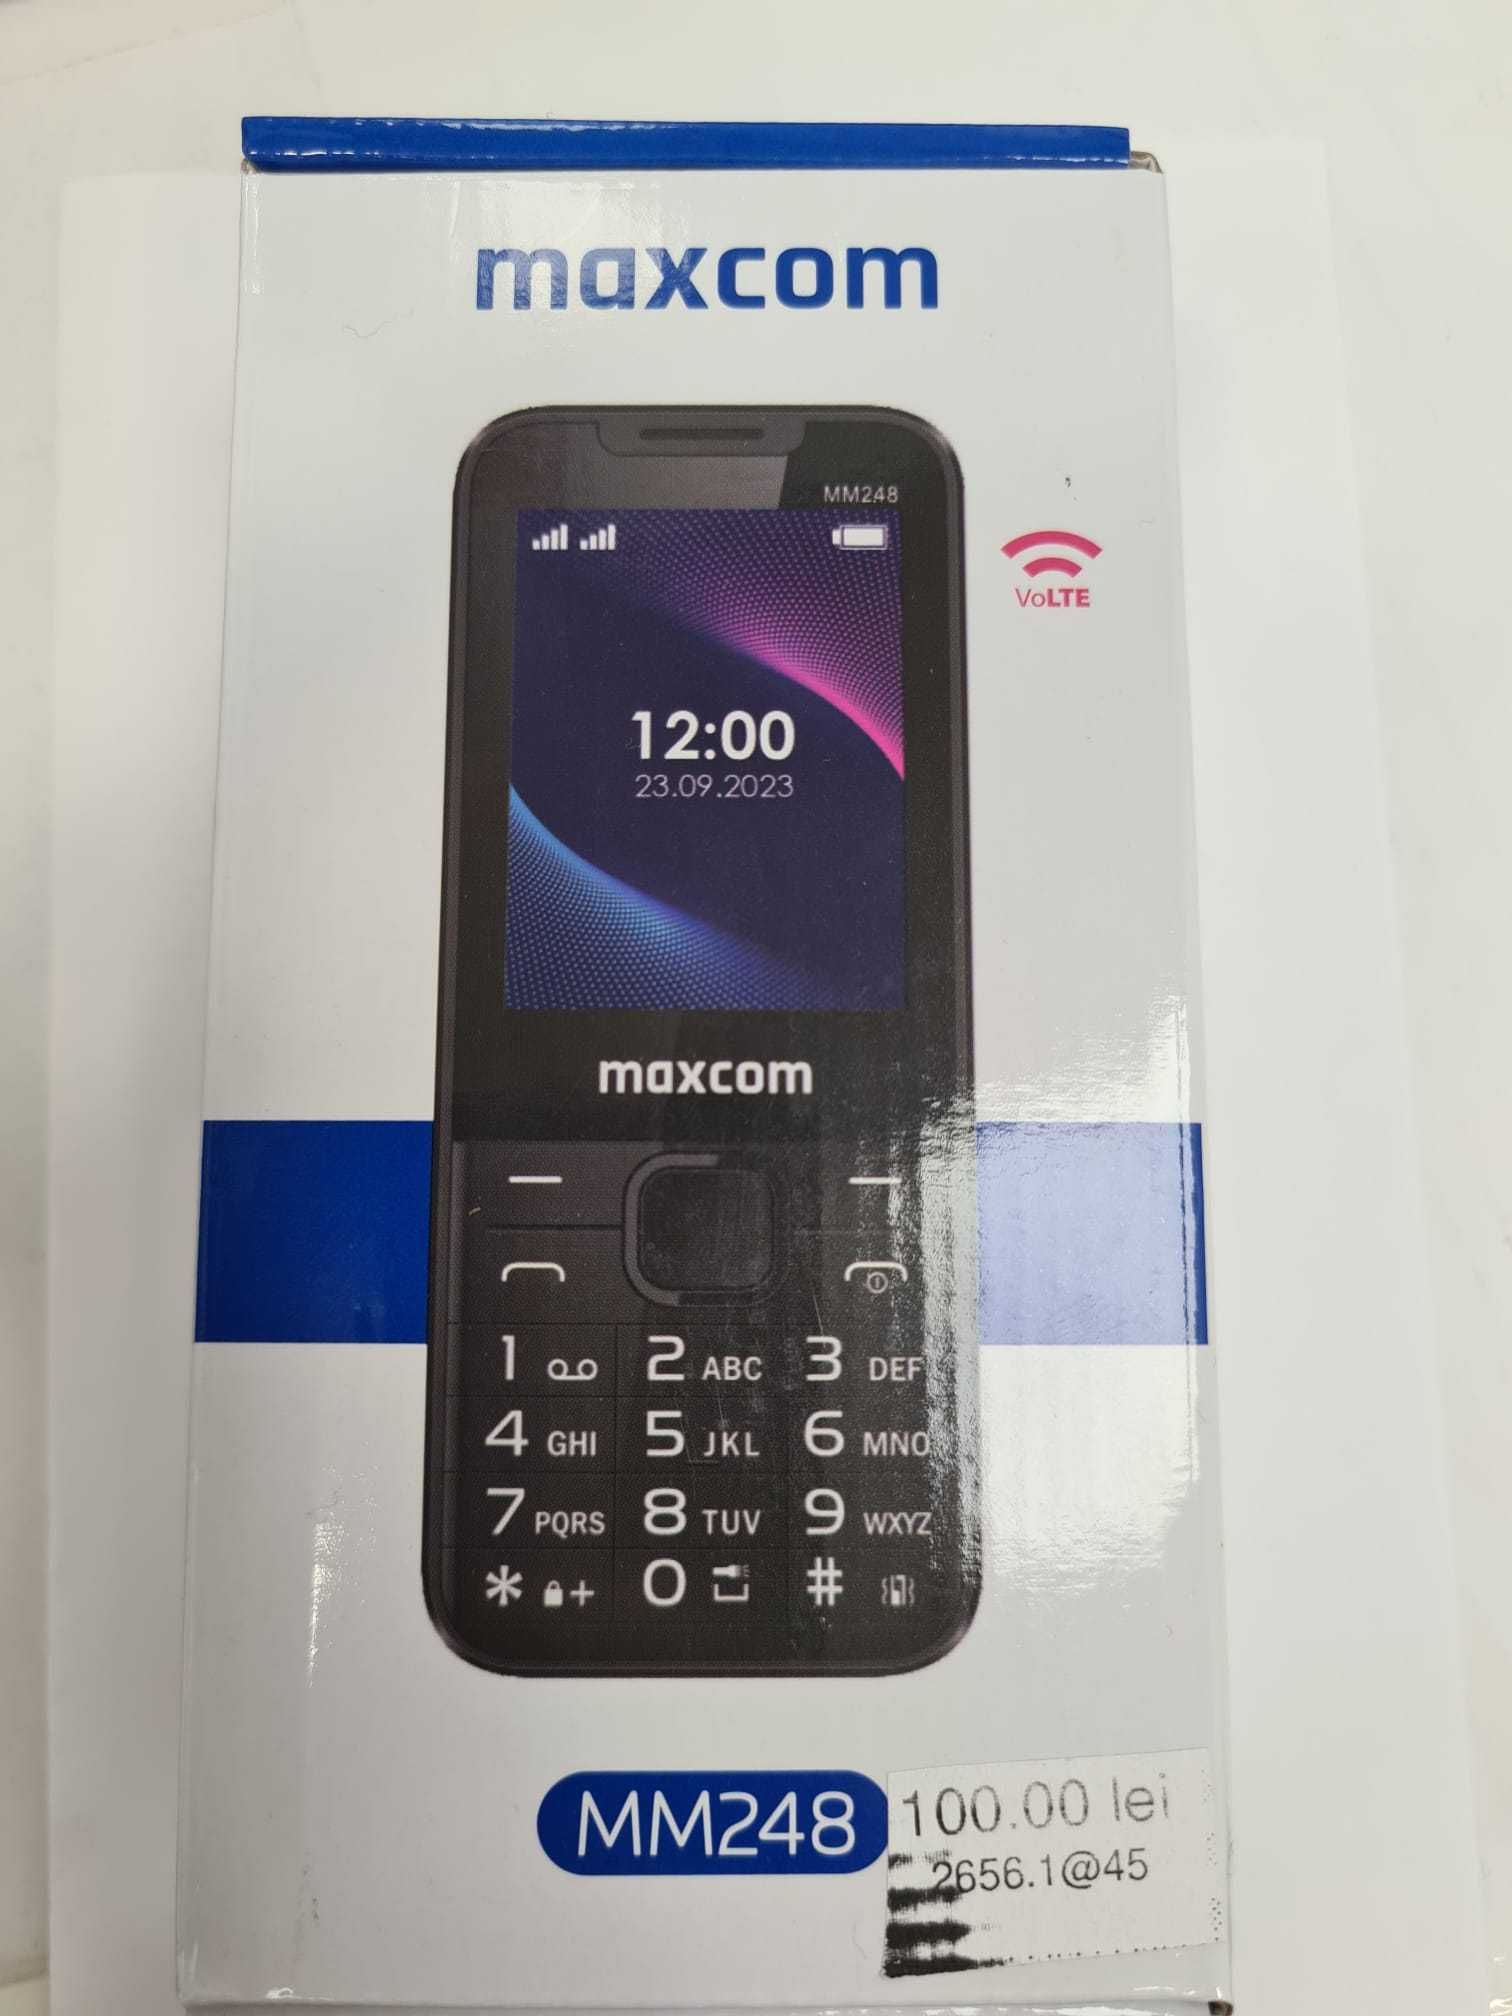 [AG45 Bacau1 B656.45] Telefon Maxcom